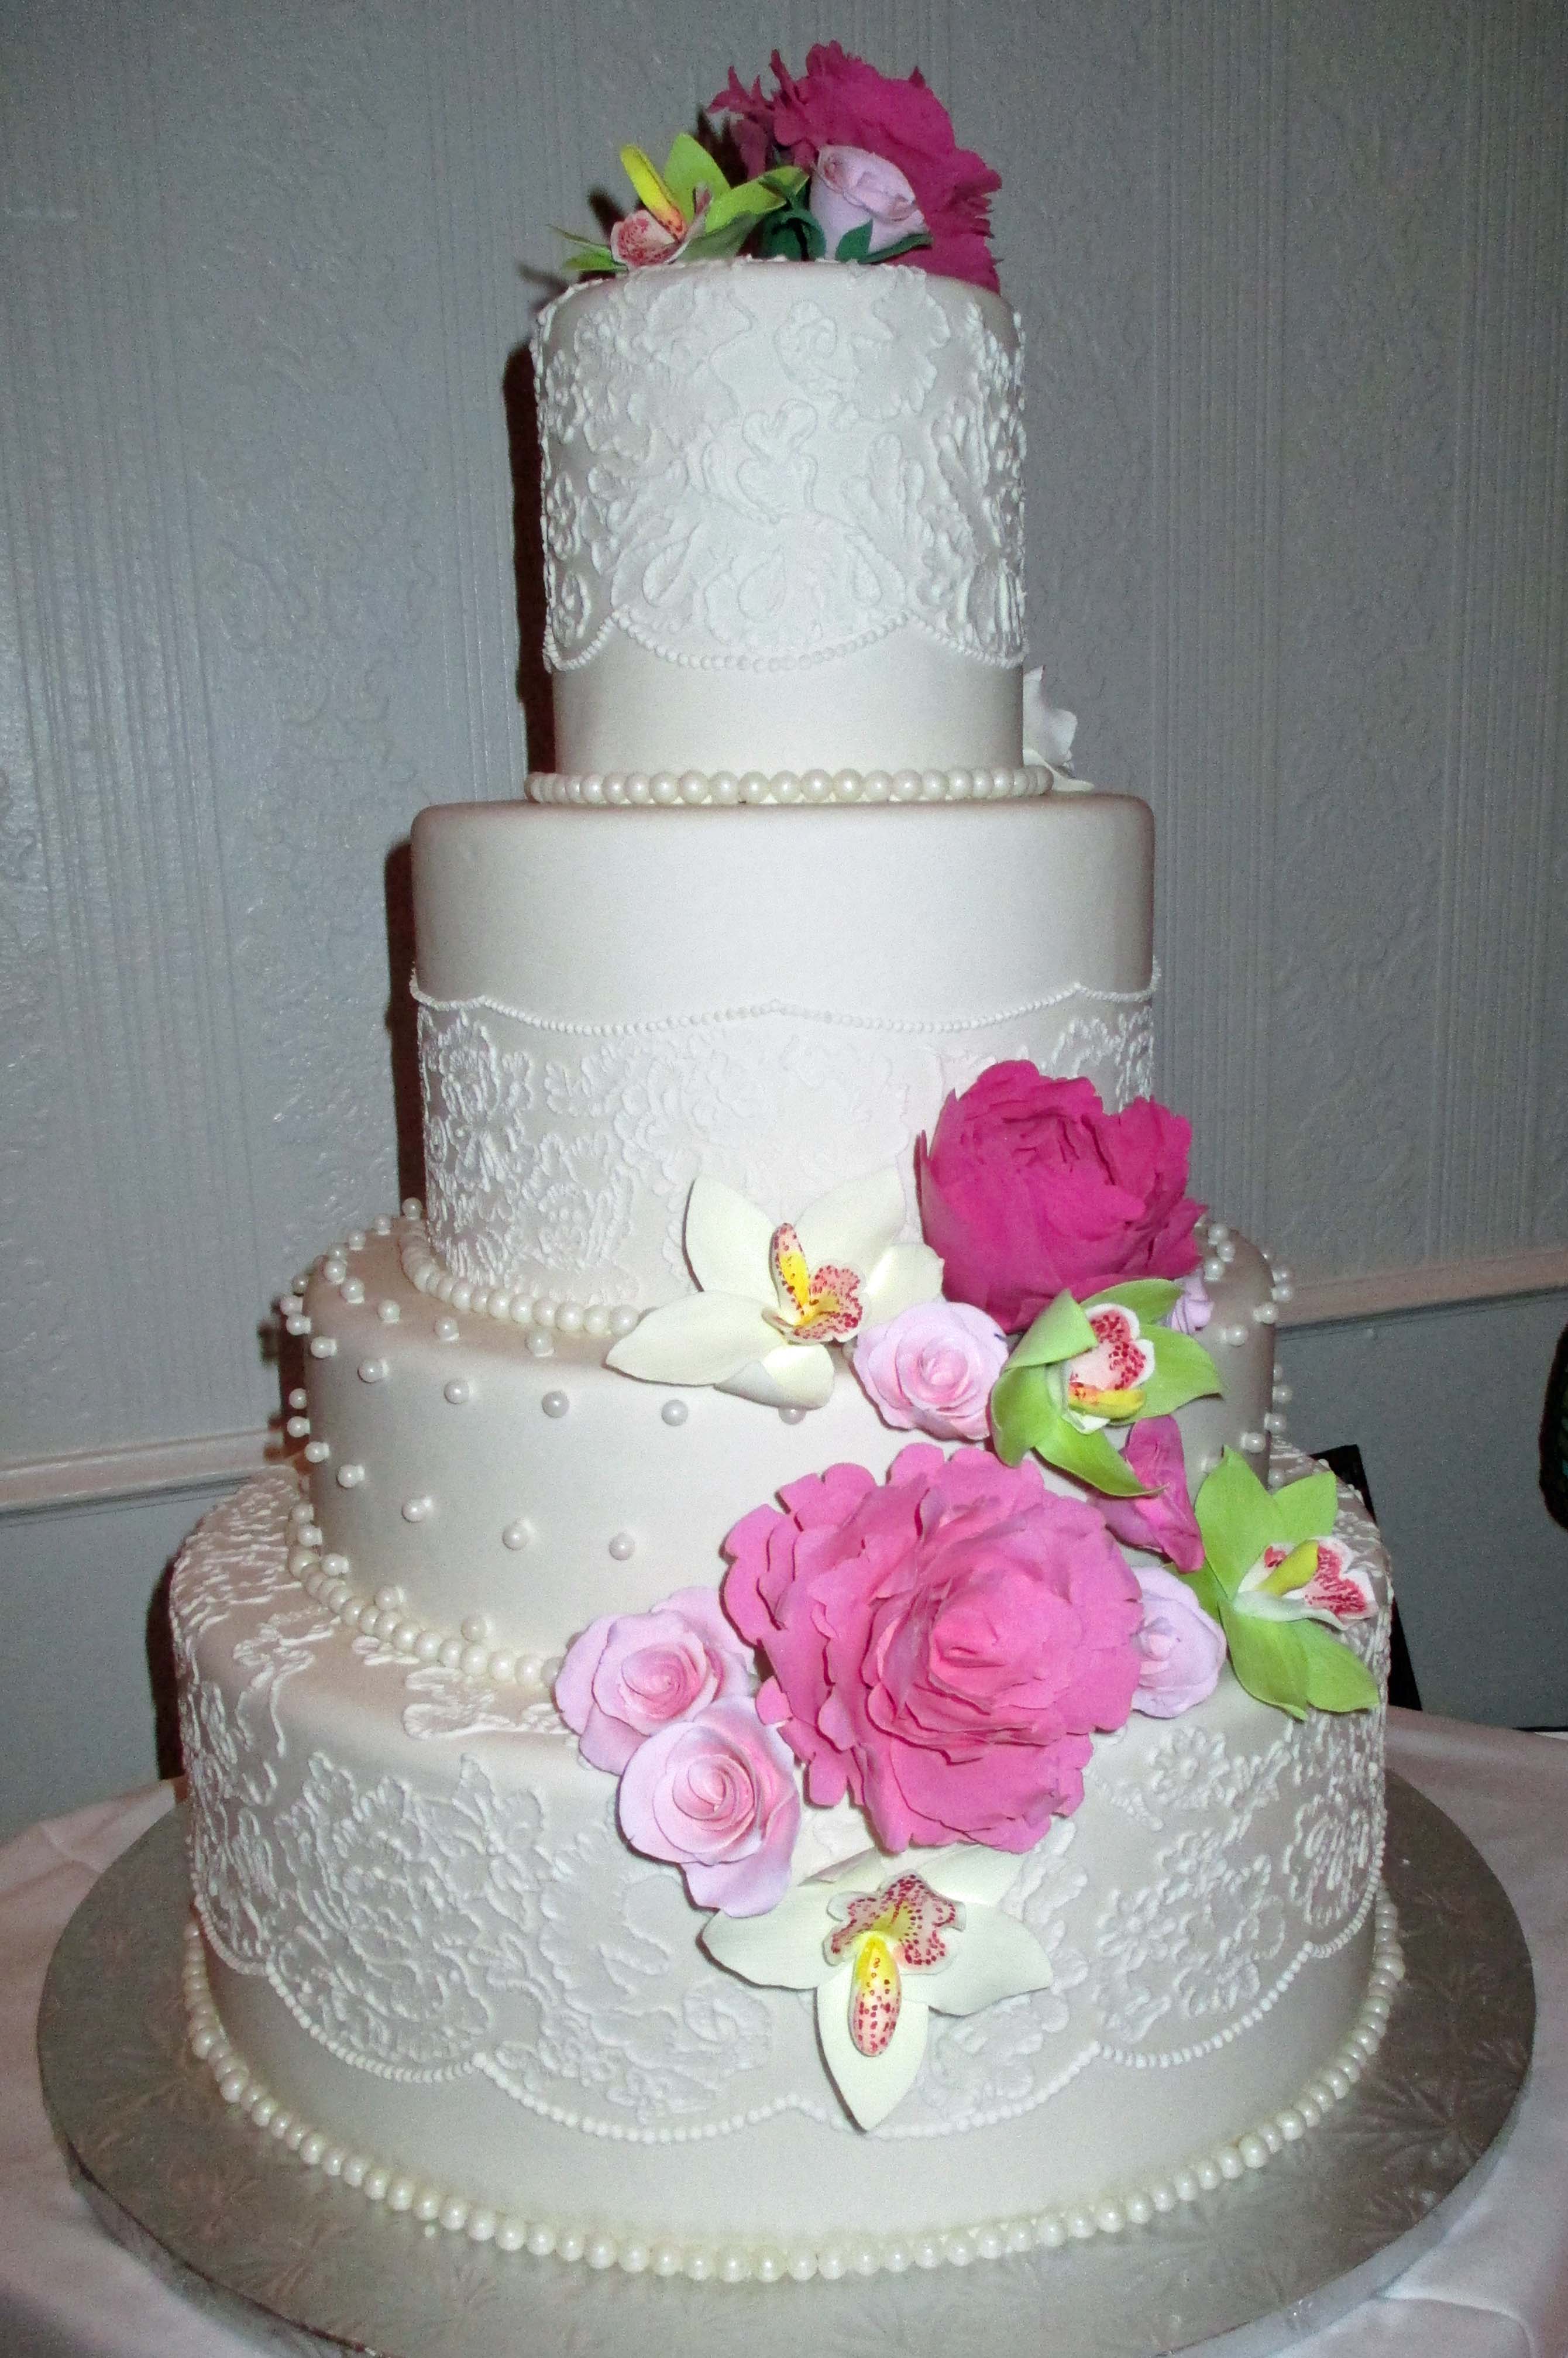 Wedding Cake Sugar Flowers 5 The Bake Works